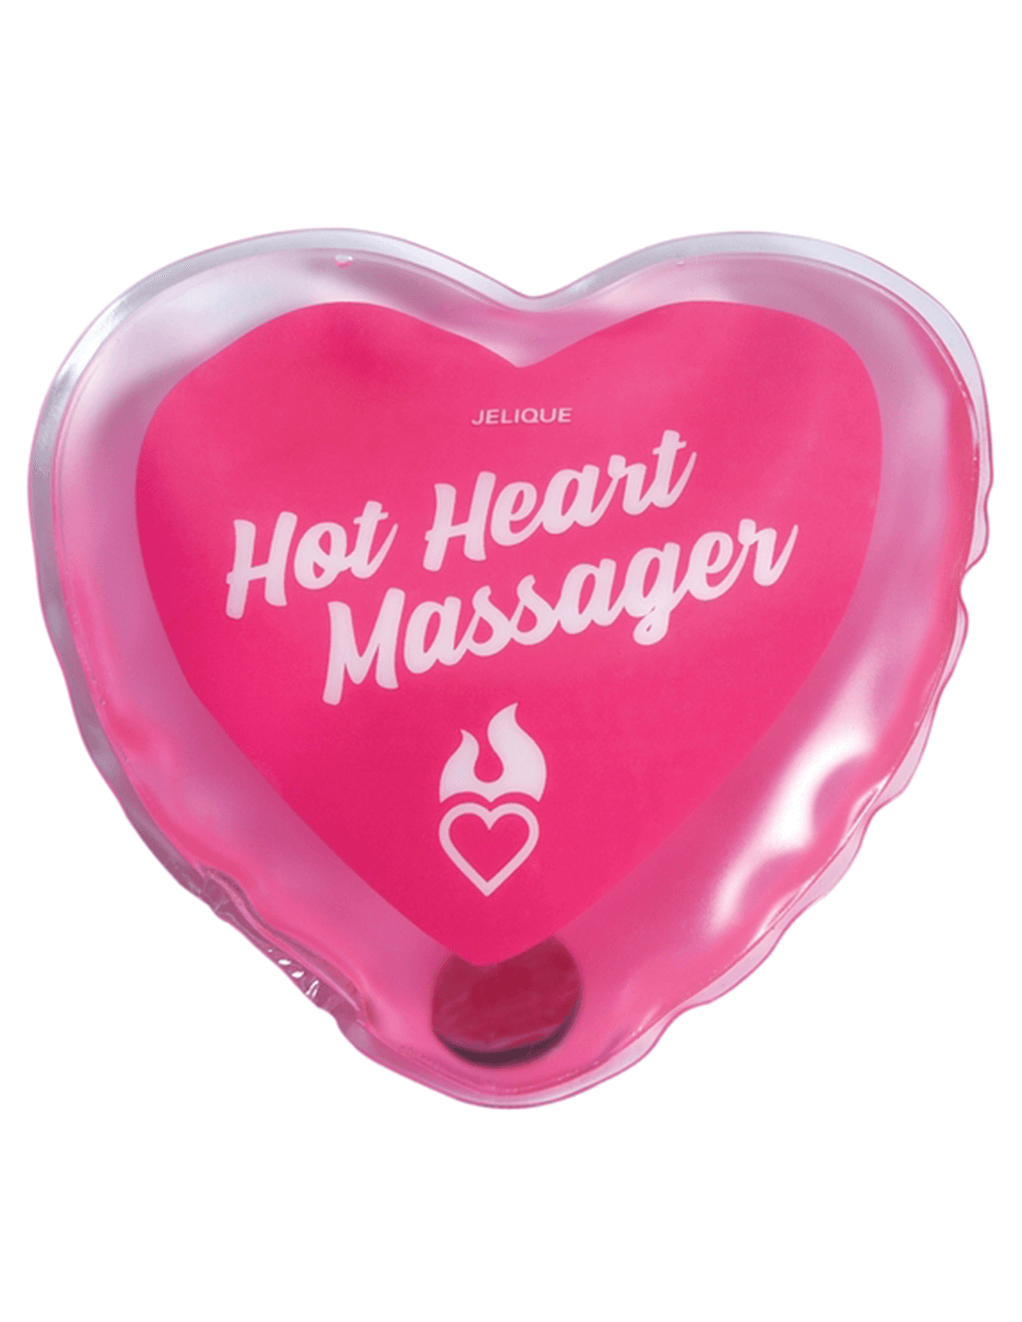 Jelique Hot Heart Massager - Product